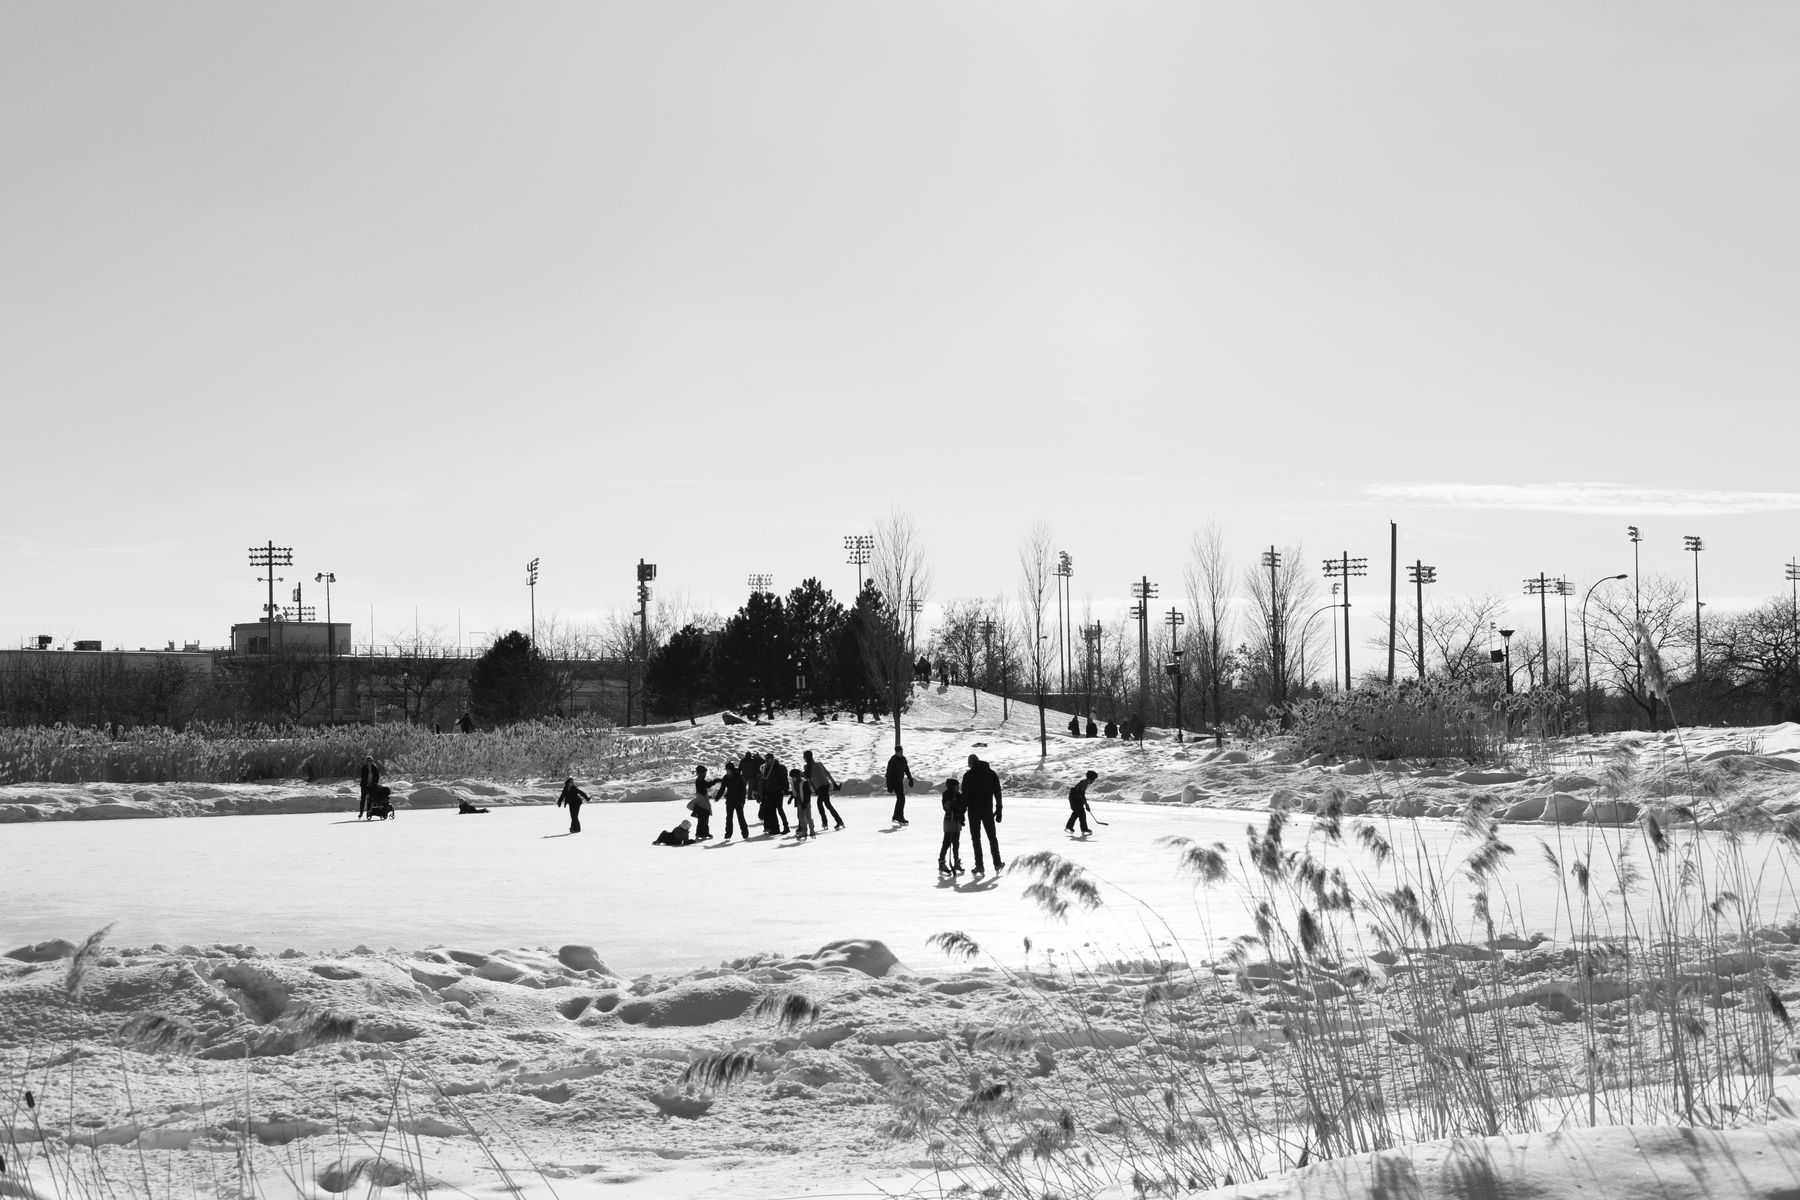 People skate on a frozen pond.